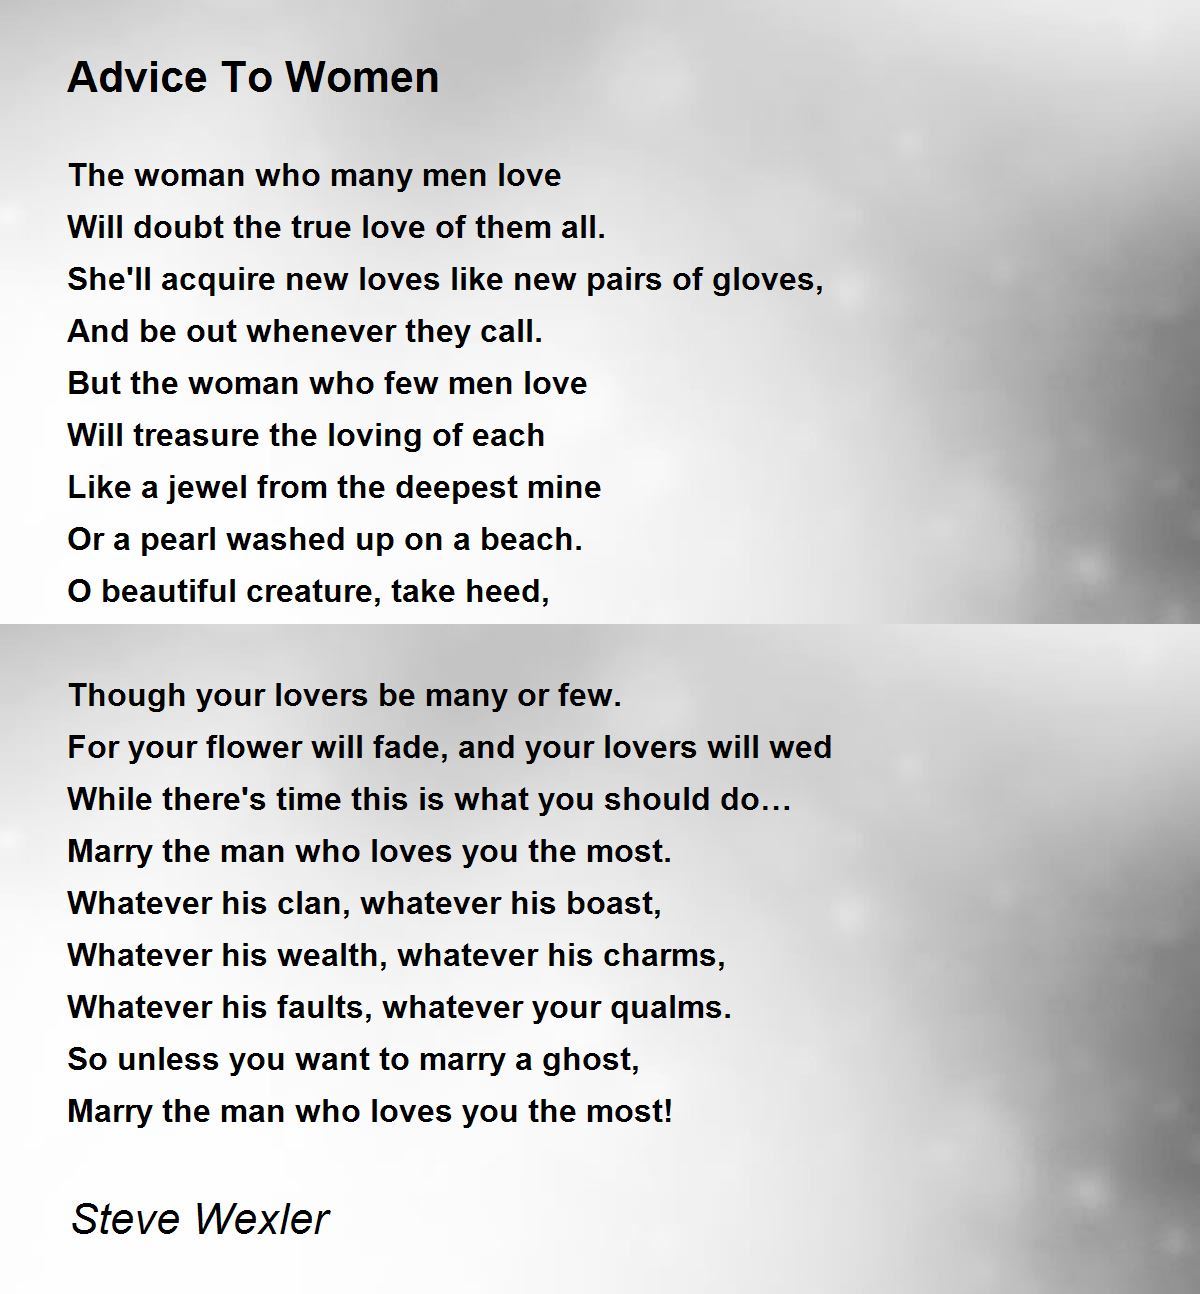 Advice To Women - Advice To Women Poem by Steve Wexler